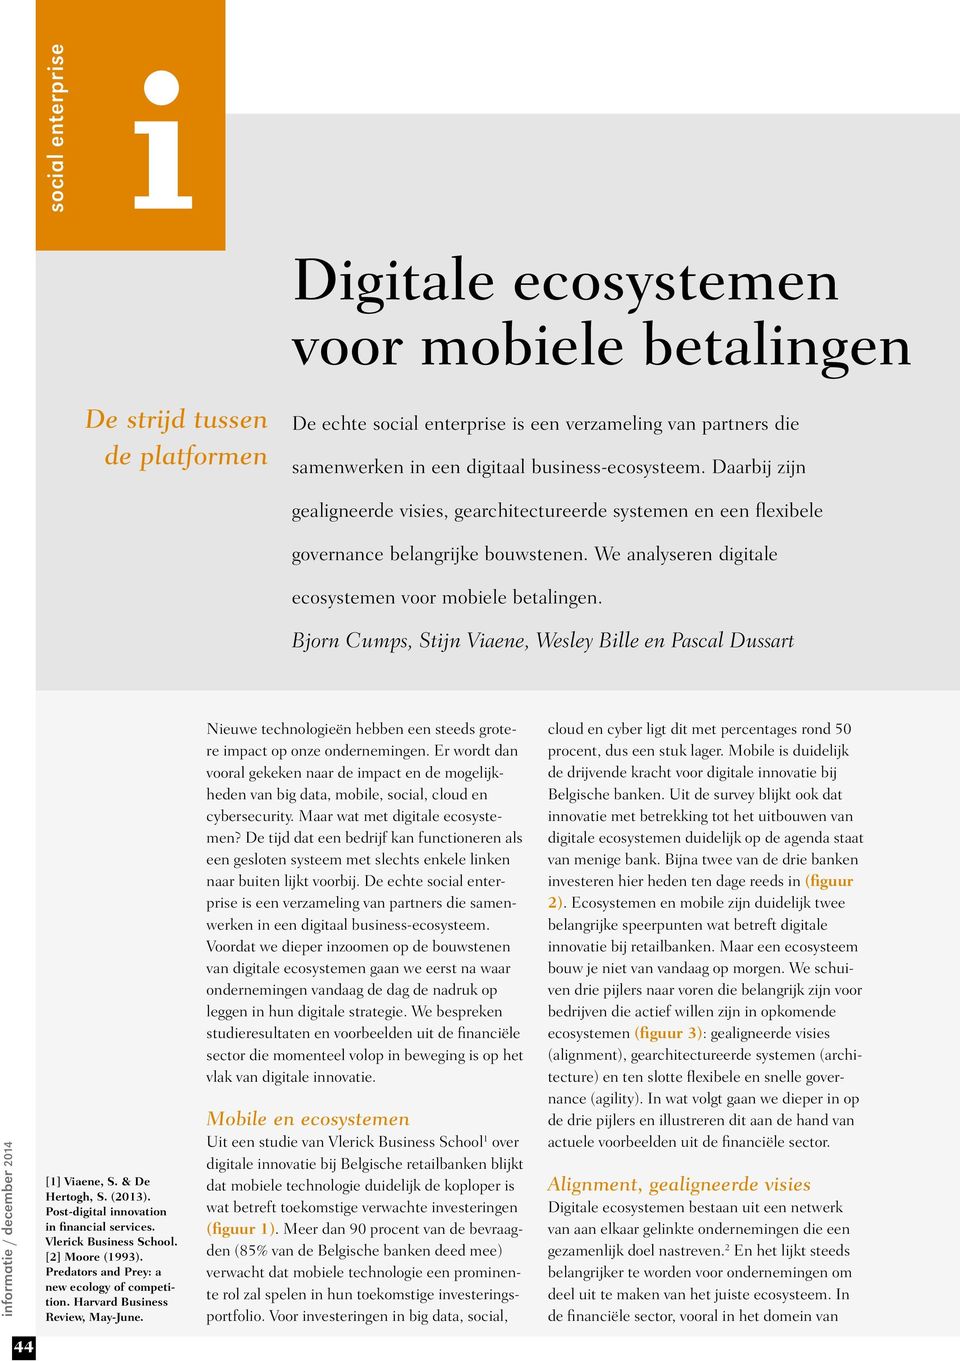 Bjorn Cumps, Stijn Viaene, Wesley Bille en Pascal Dussart [1] Viaene, S. & De Hertogh, S. (2013). Post-digital innovation in financial services. Vlerick Business School. [2] Moore (1993).